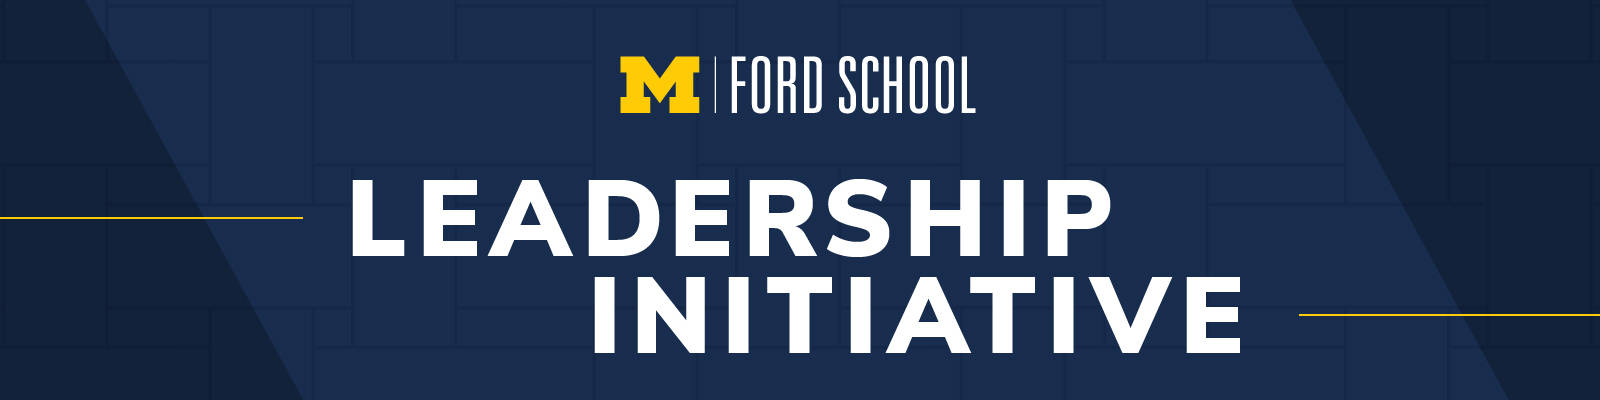 Leadership Initiative header logo